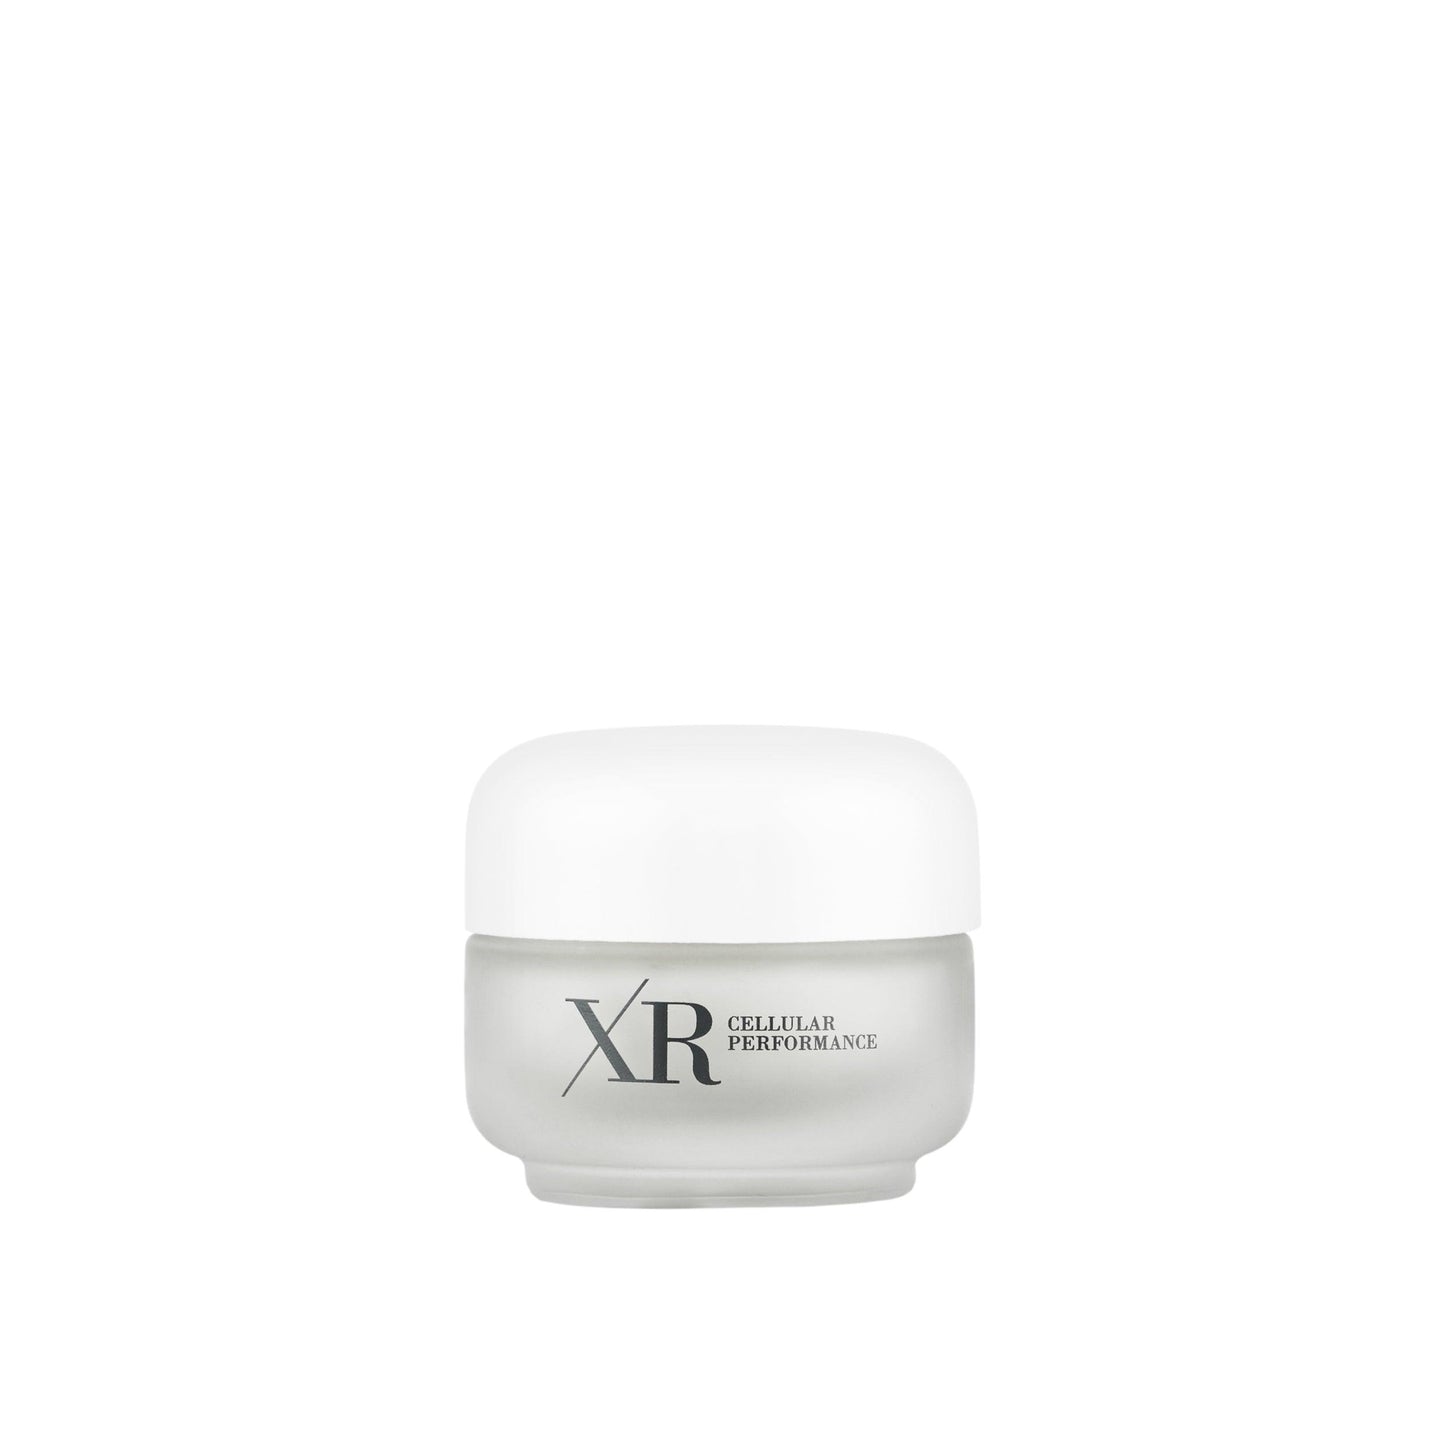 XR Cellular Performance - MCCM Medical Cosmetics